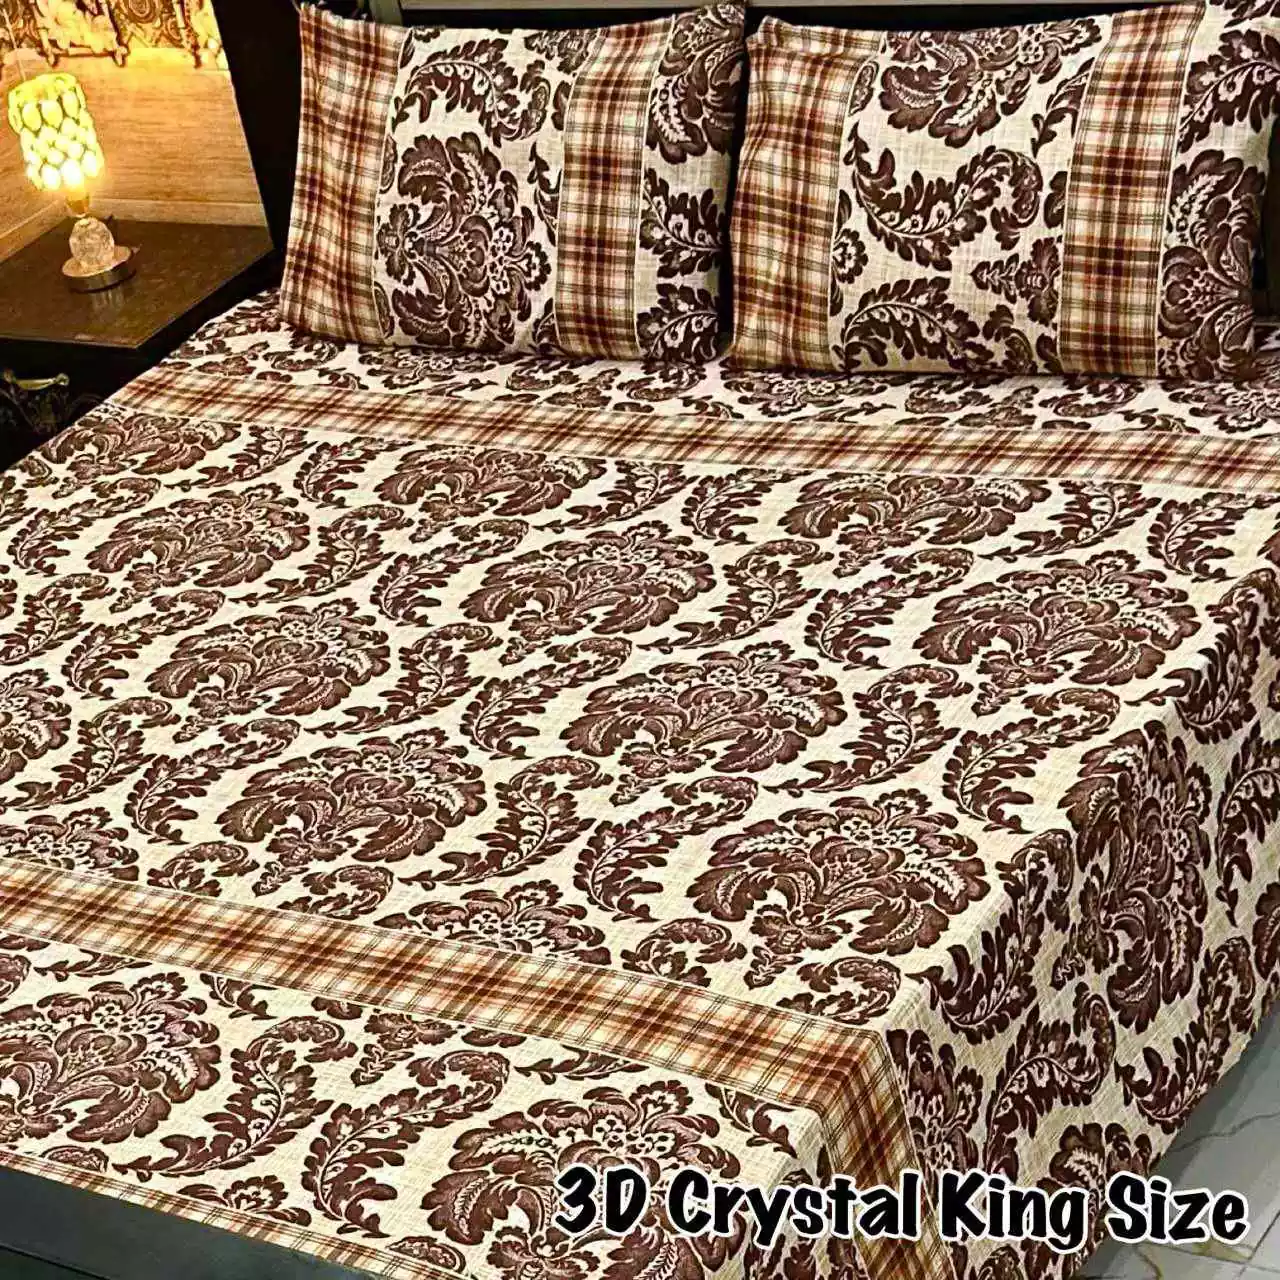 DF-CBSKS-13: DFY Bedding 3D Crystal Bed Sheet King Size